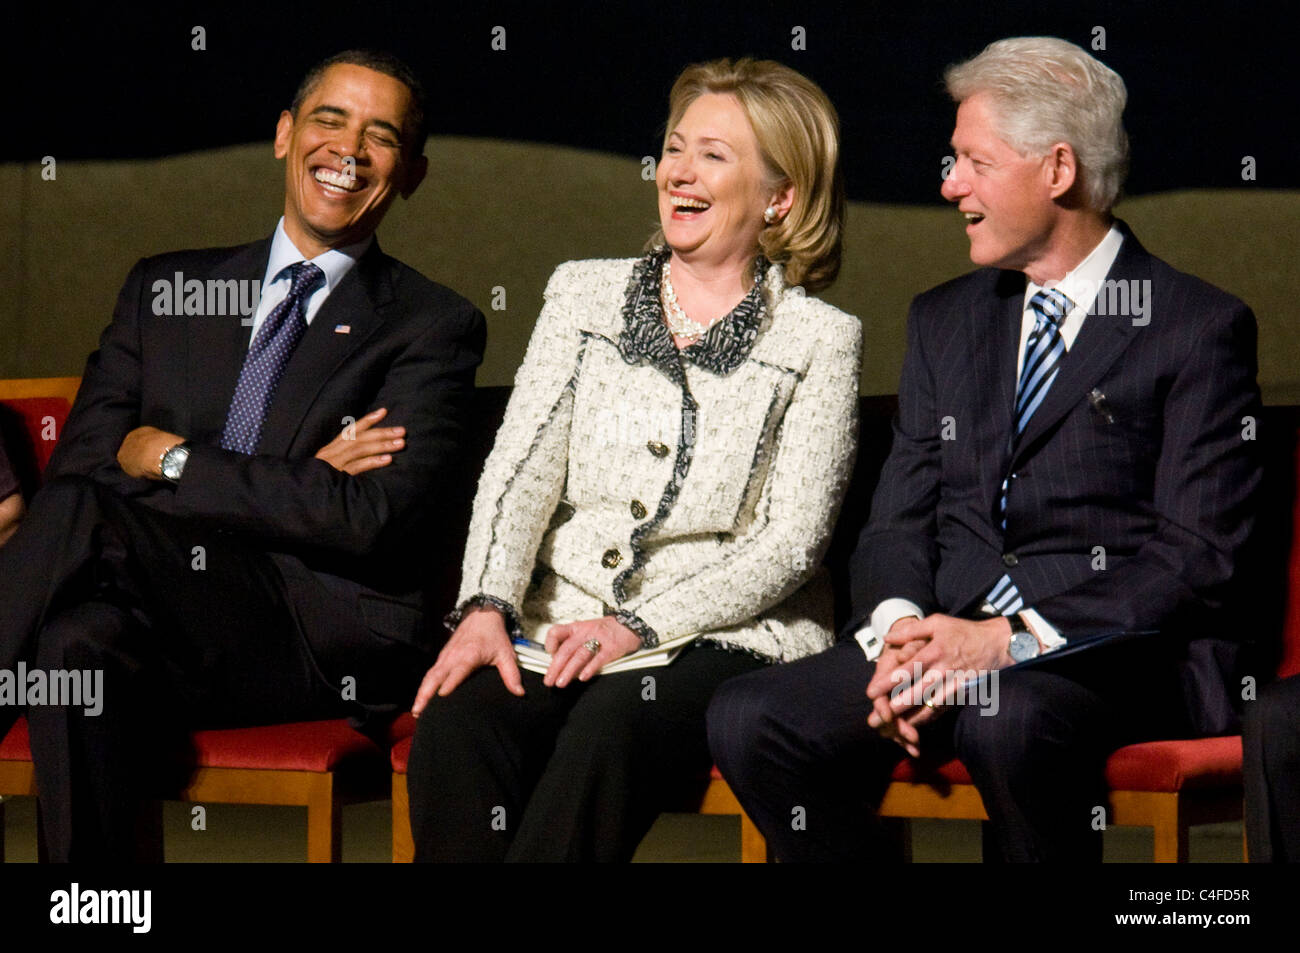 President Barack Obama, Secretary of State Hillary Clinton and former President Bill Clinton. Stock Photo